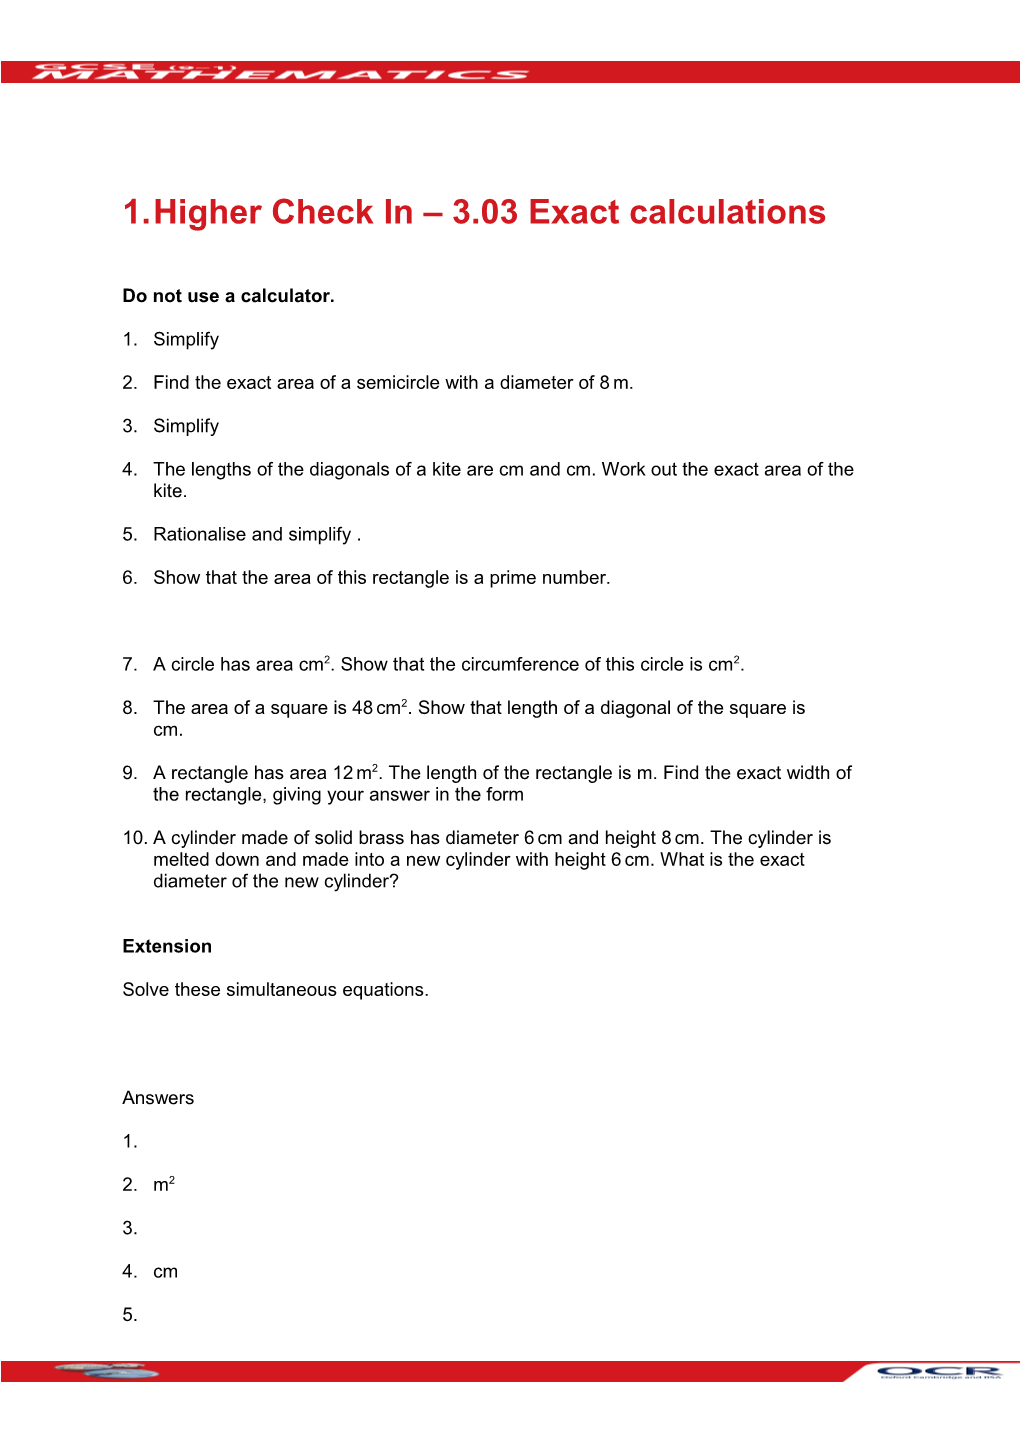 GCSE (9-1) Mathematics Higher Check in 3.03 Exact Calculations